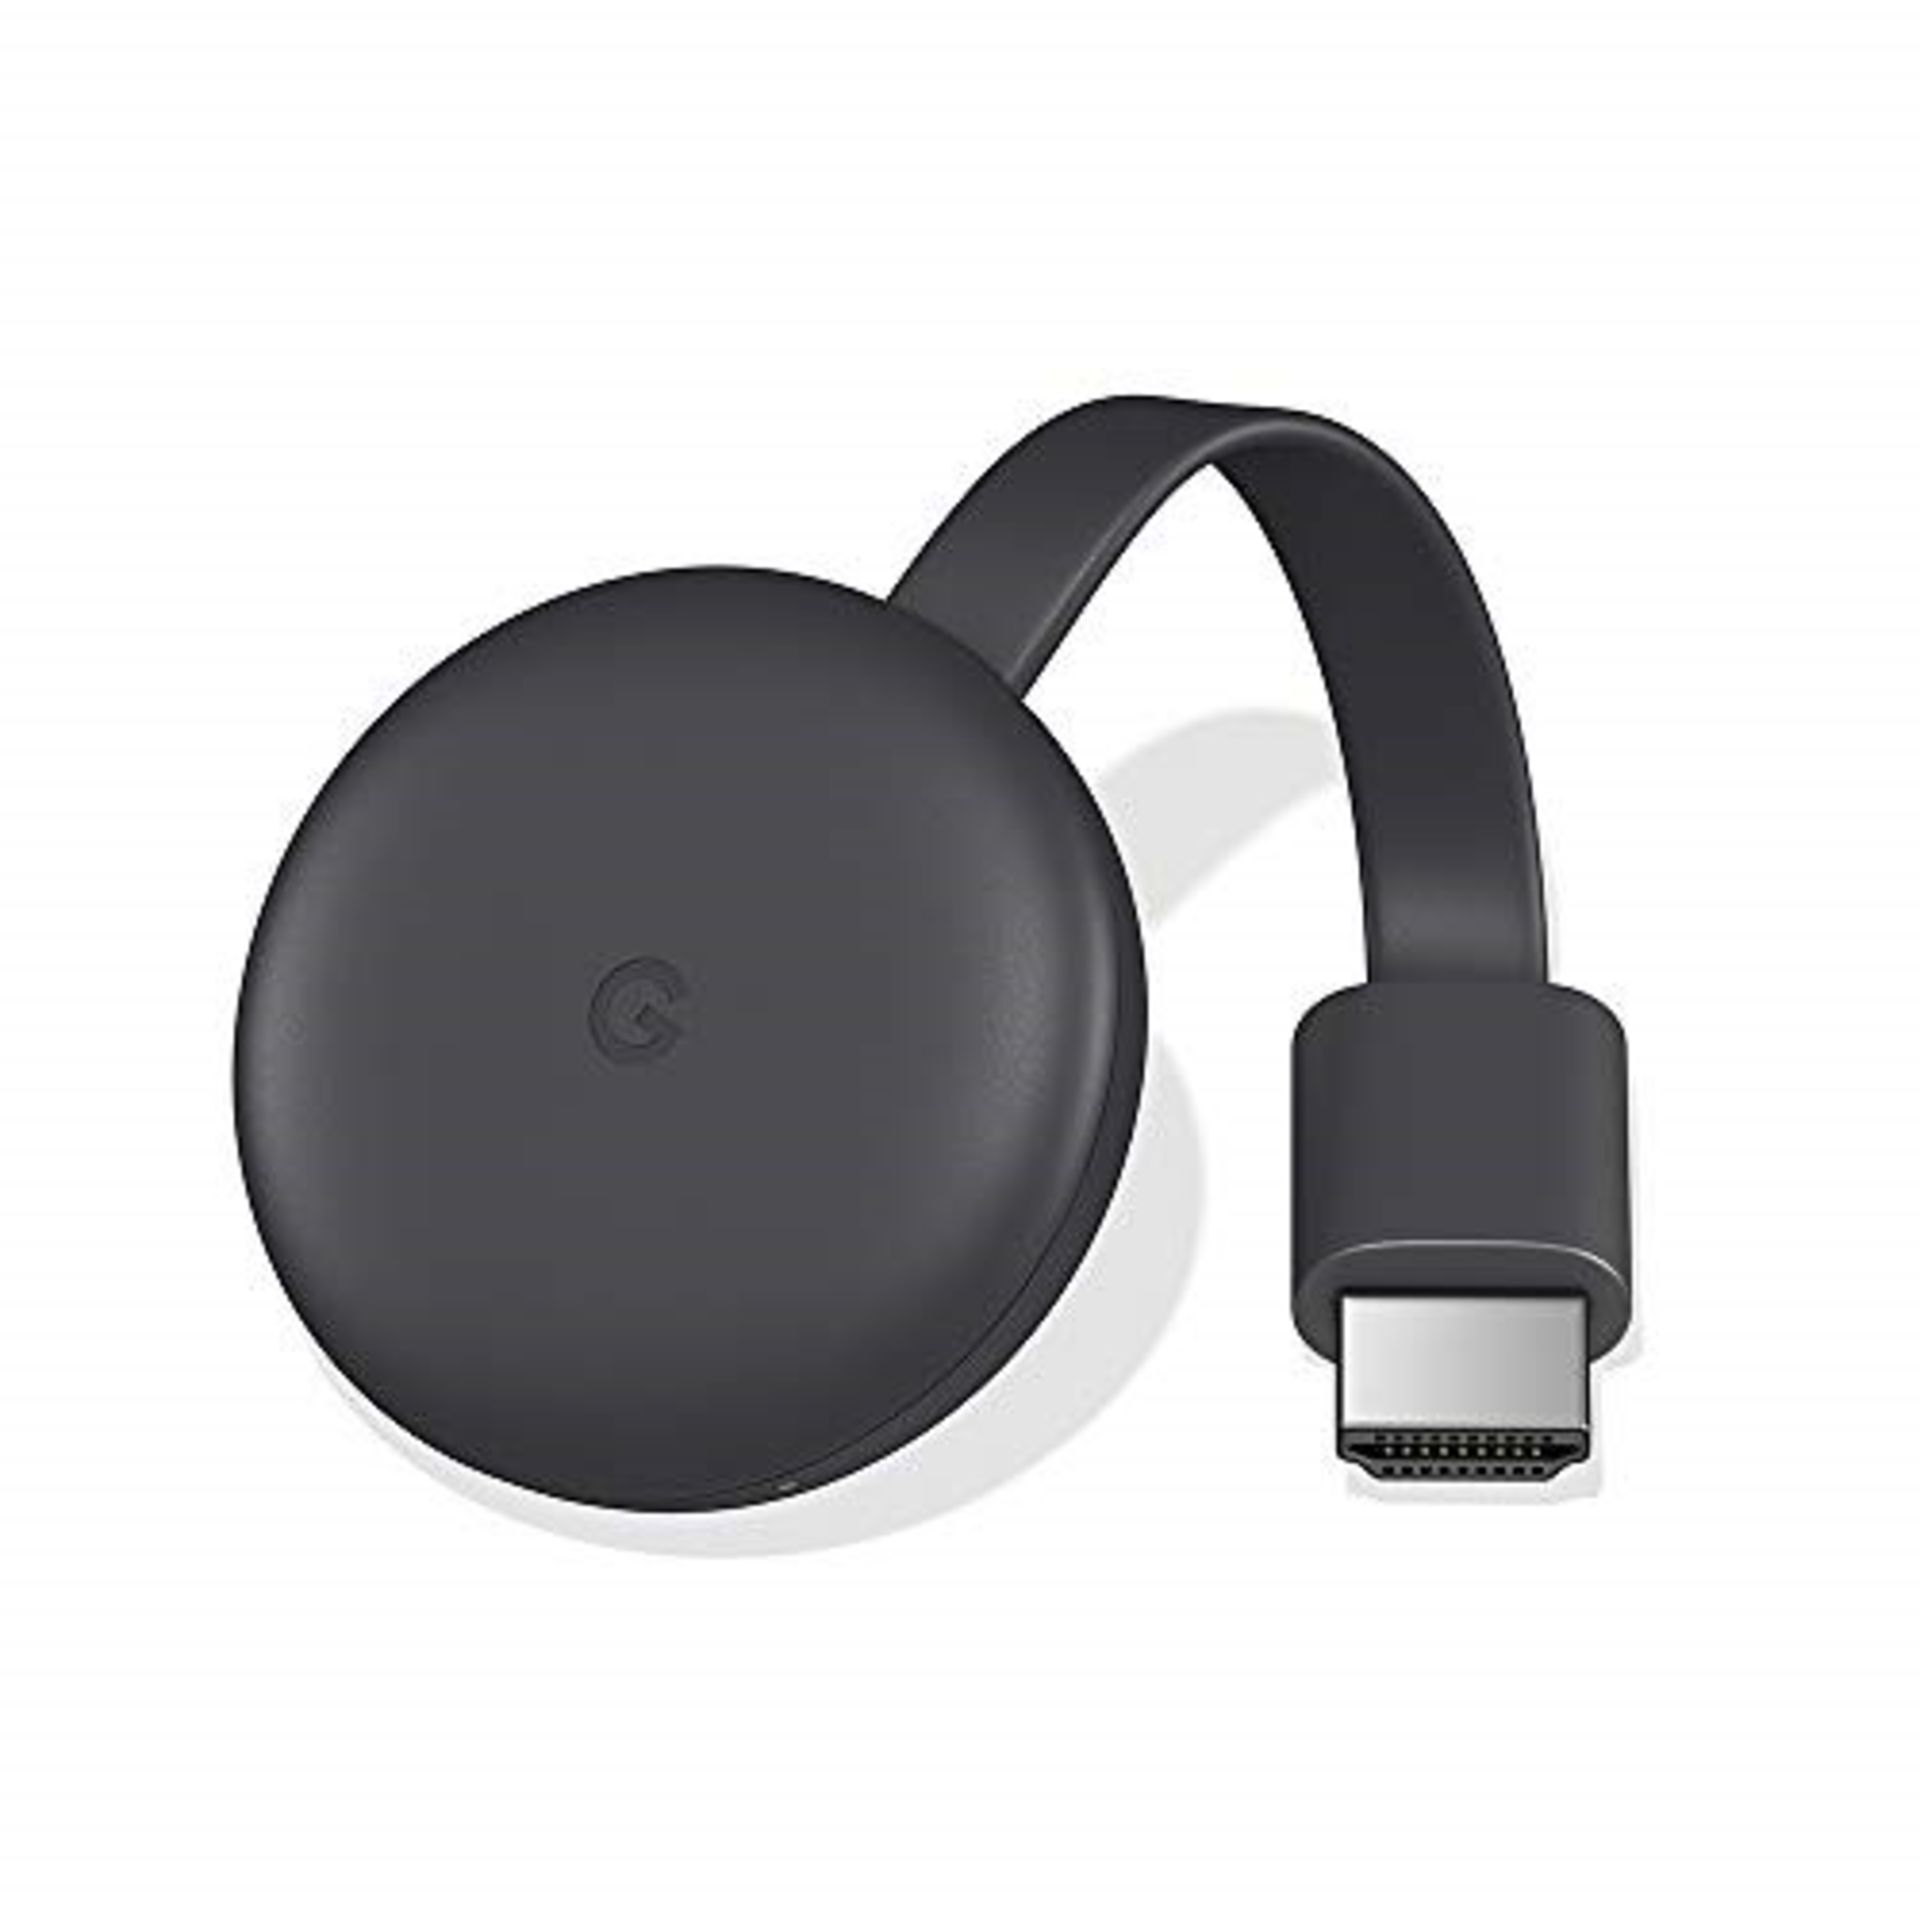 Google Chromecast Smart TV Streaming Stick